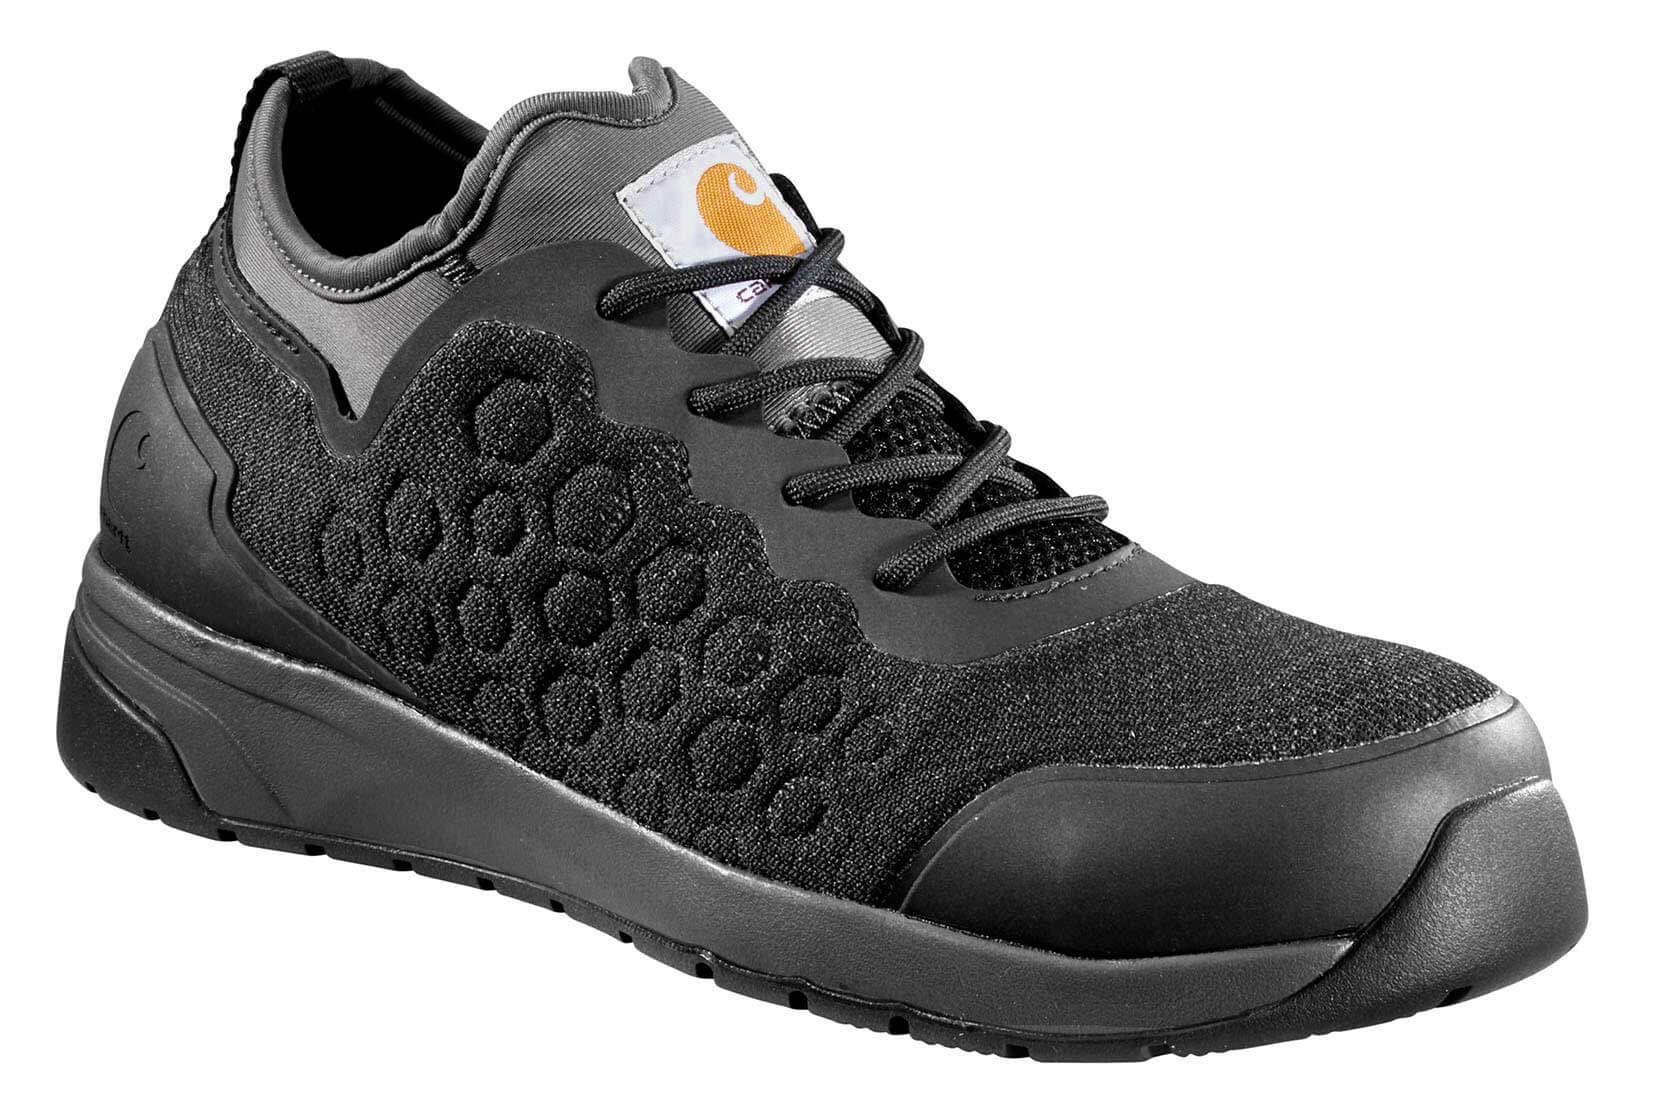 Carhartt CMD3461 Men's Force Composite Toe Work Shoe